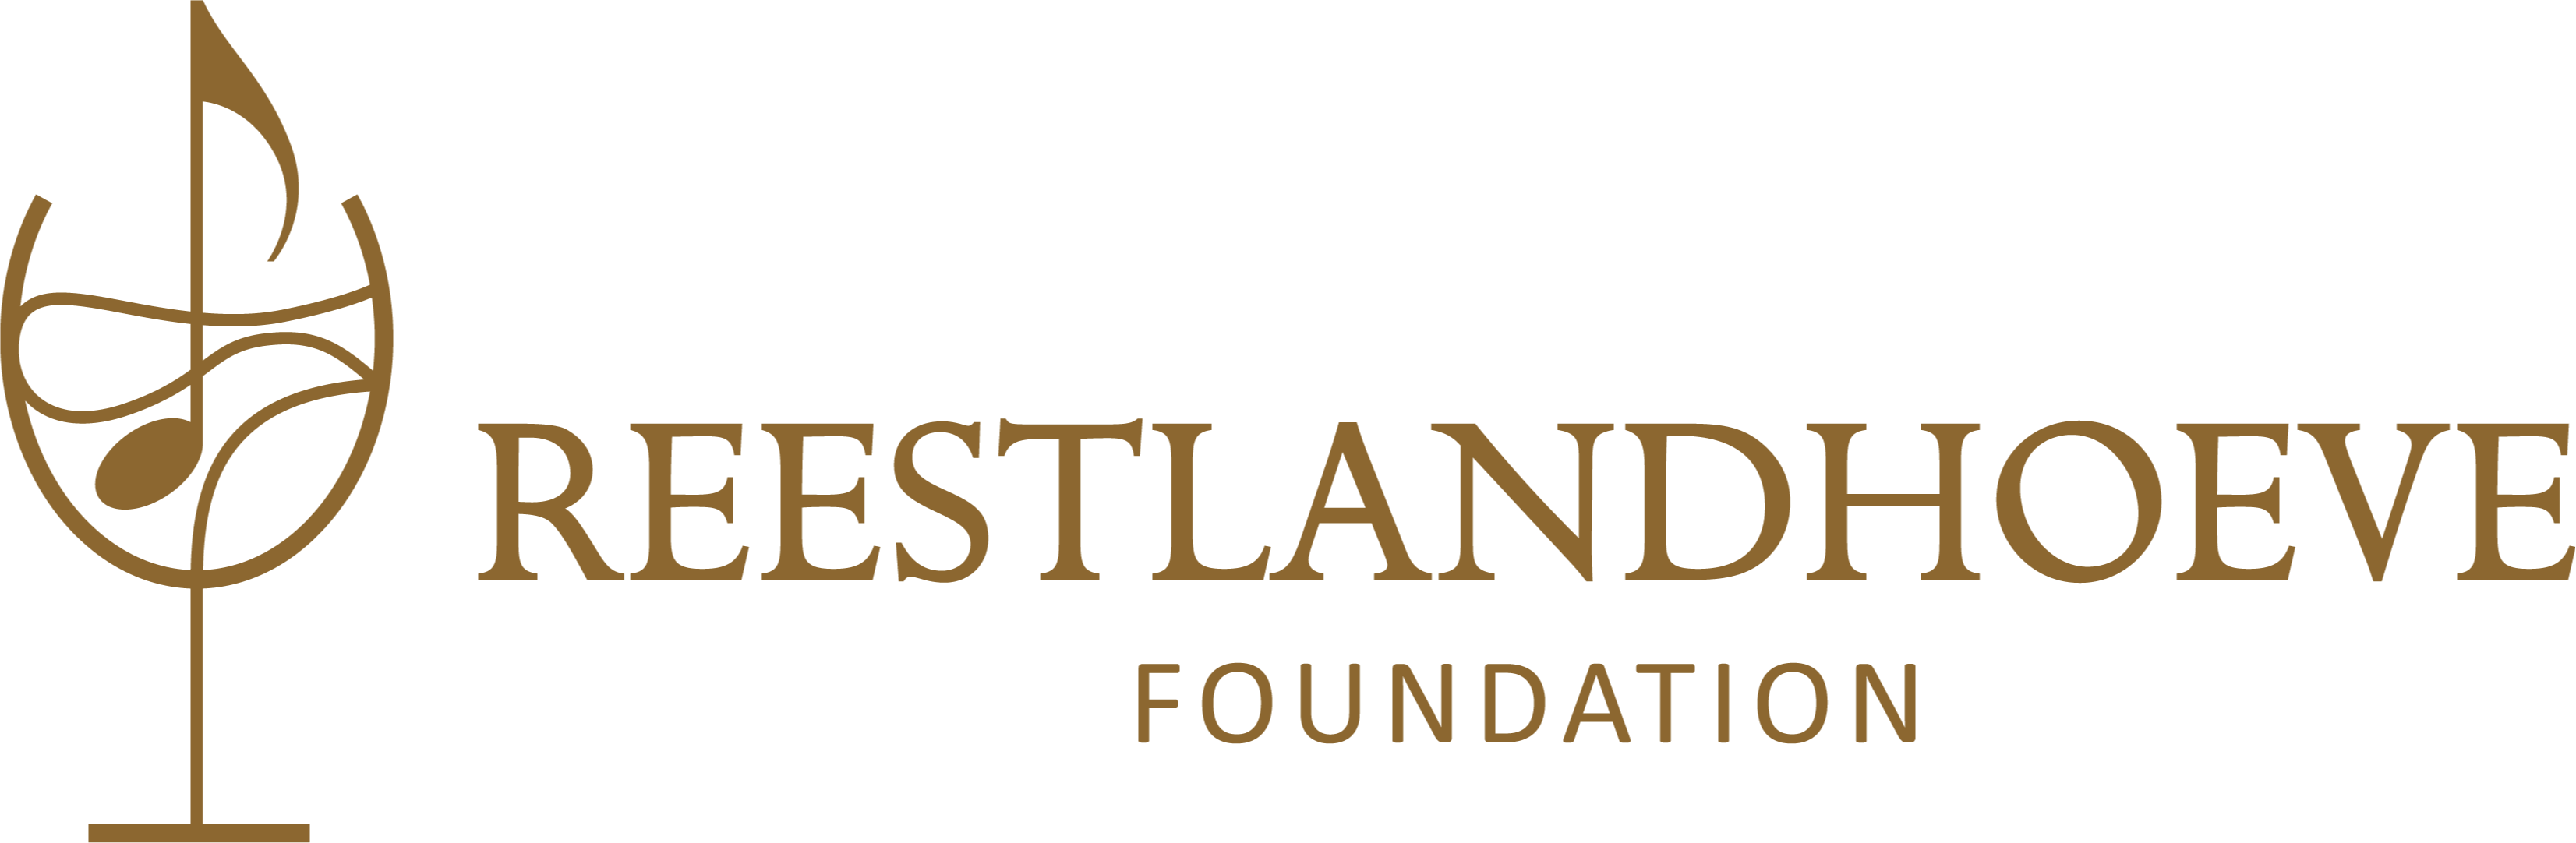 Stichting Reestlandhoeve Foundation logo